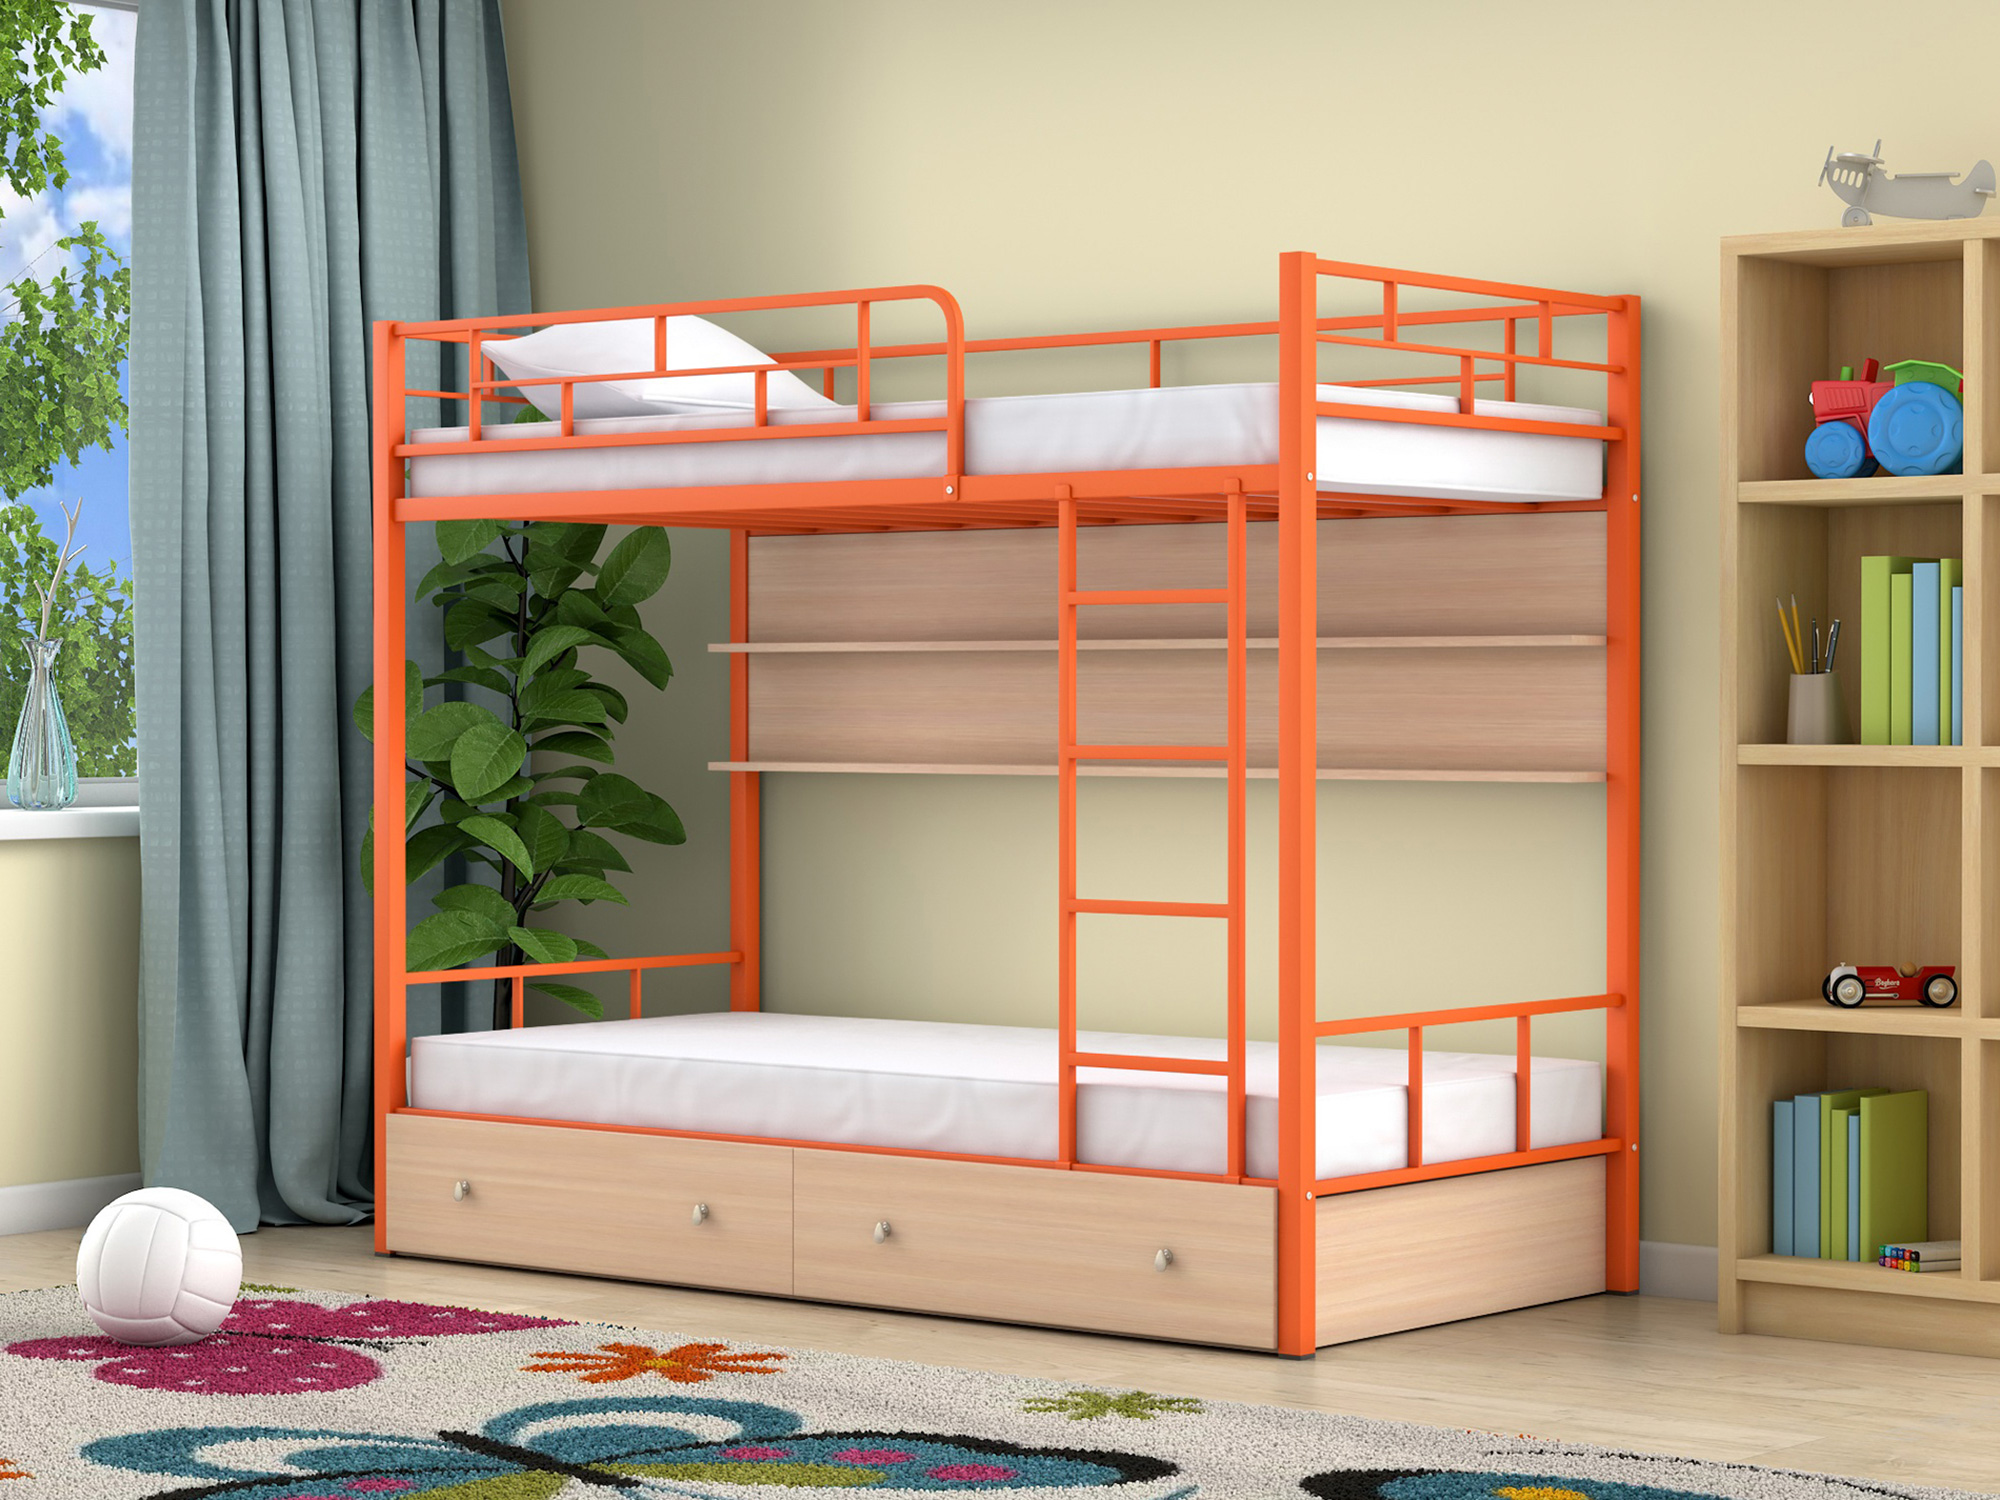 Двухъярусная кровать Ницца (90х190) Дуб молочный, , Бежевый, Оранжевый, ЛДСП, Металл двухъярусная кровать ницца 90х190 дуб молочный бежевый оранжевый лдсп металл